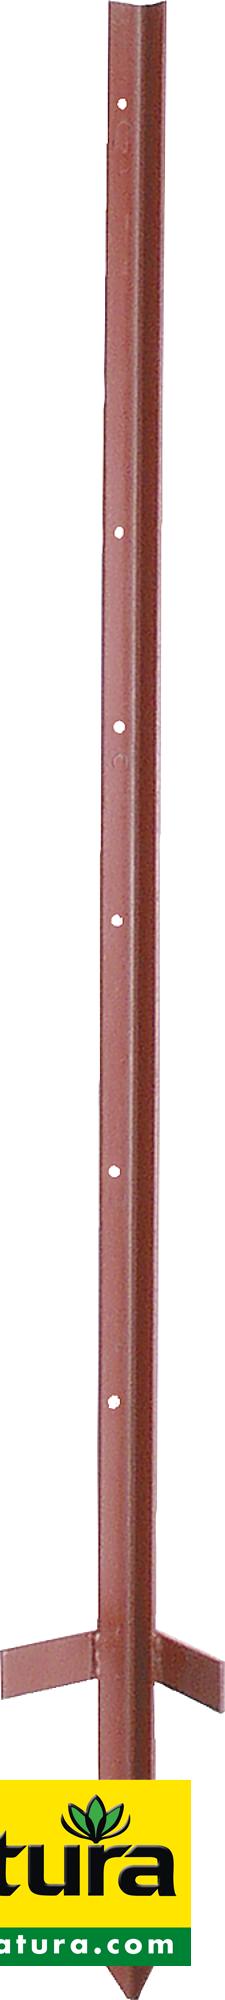 Winkelstahlpfahl, 2 mm stark, lackiert, 1,15 m, mit Trittfuß (10 Stück / Pack)